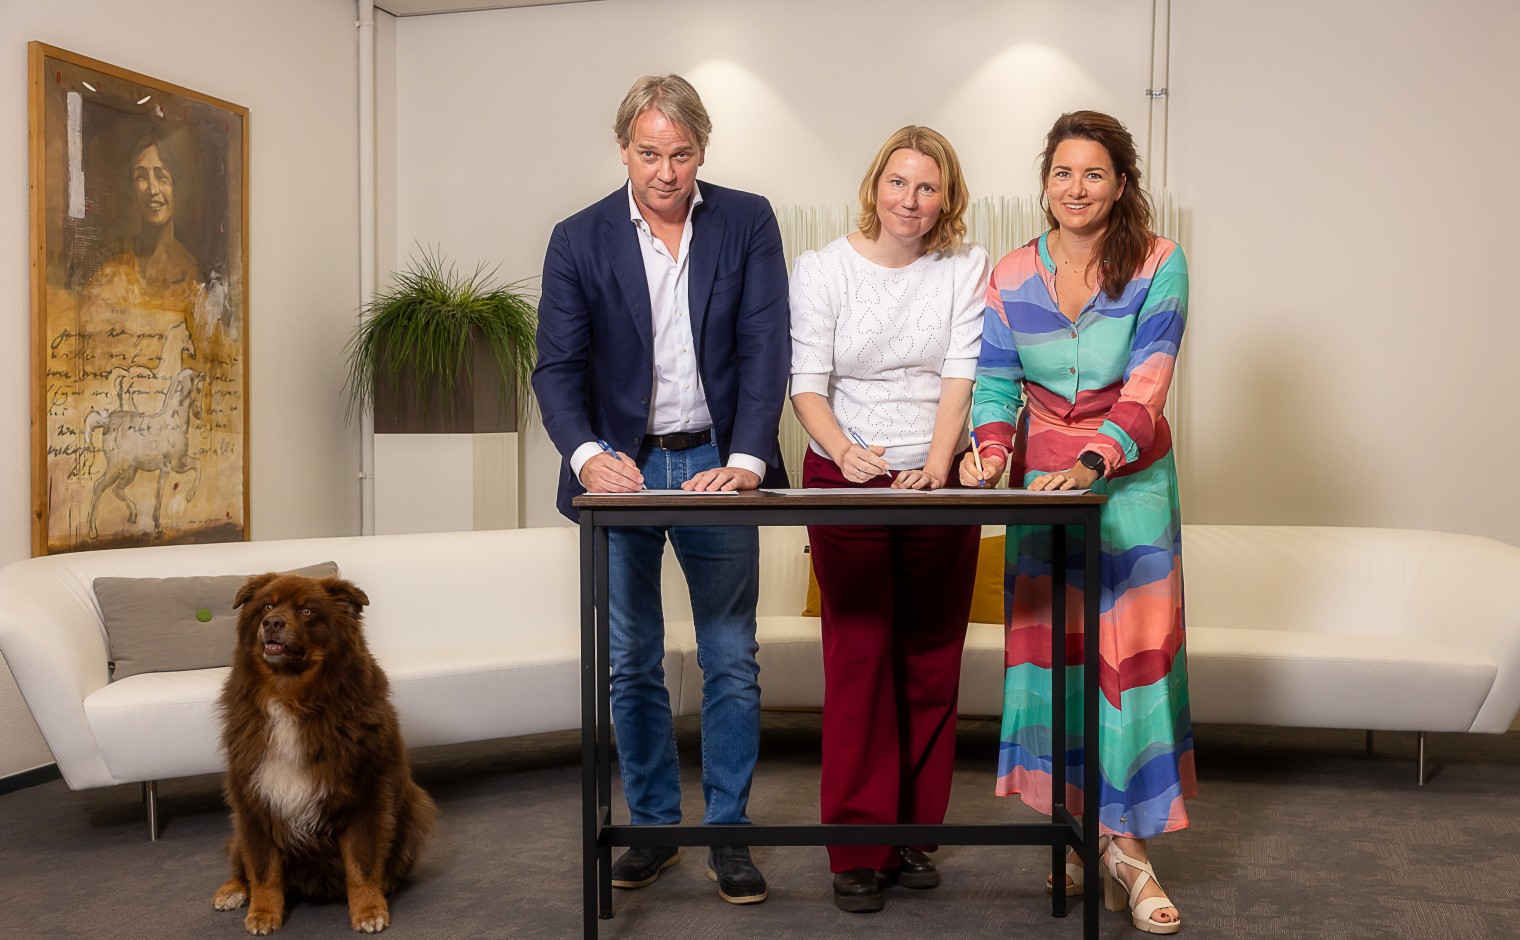 Ard Malenstein (Pets Place), Daphne Groenendijk (Hondenbescherming) en Marlou Mulders (Prins Petfoods) tekenen de samenwerkingsovereenkomst.